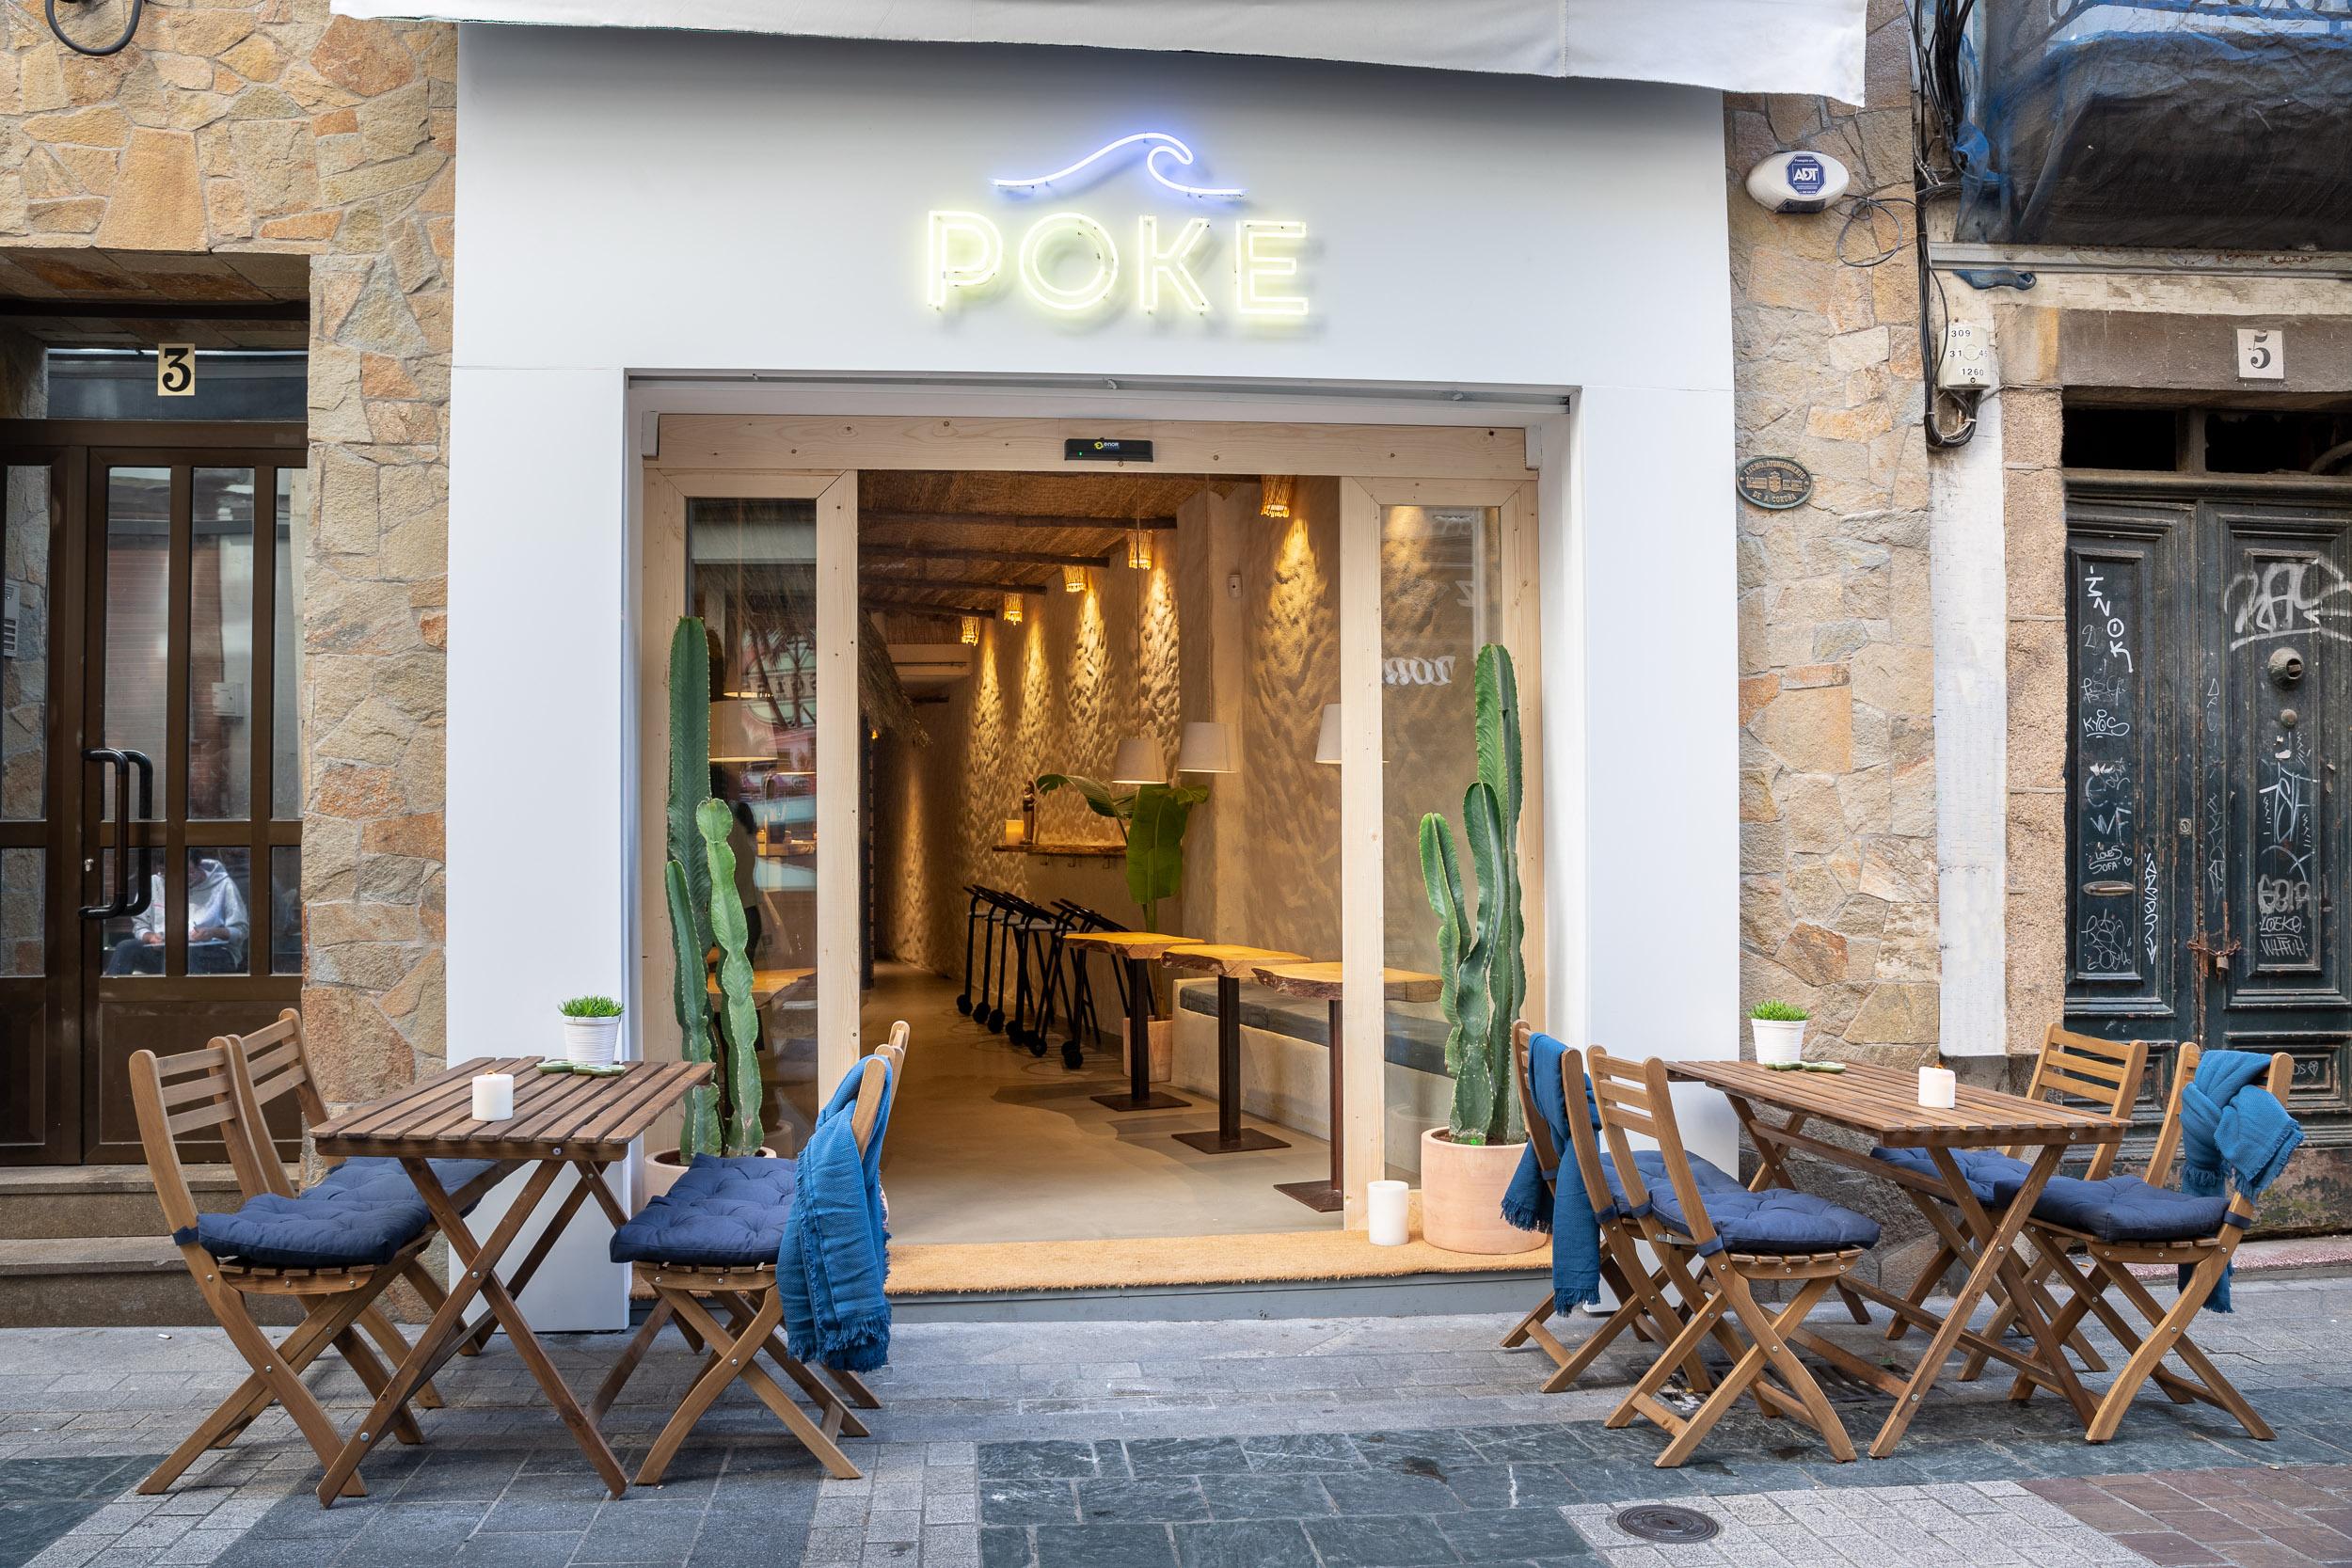 Poke by Art abrió hace un par de semanas en la calle Galera (Poke by Art)